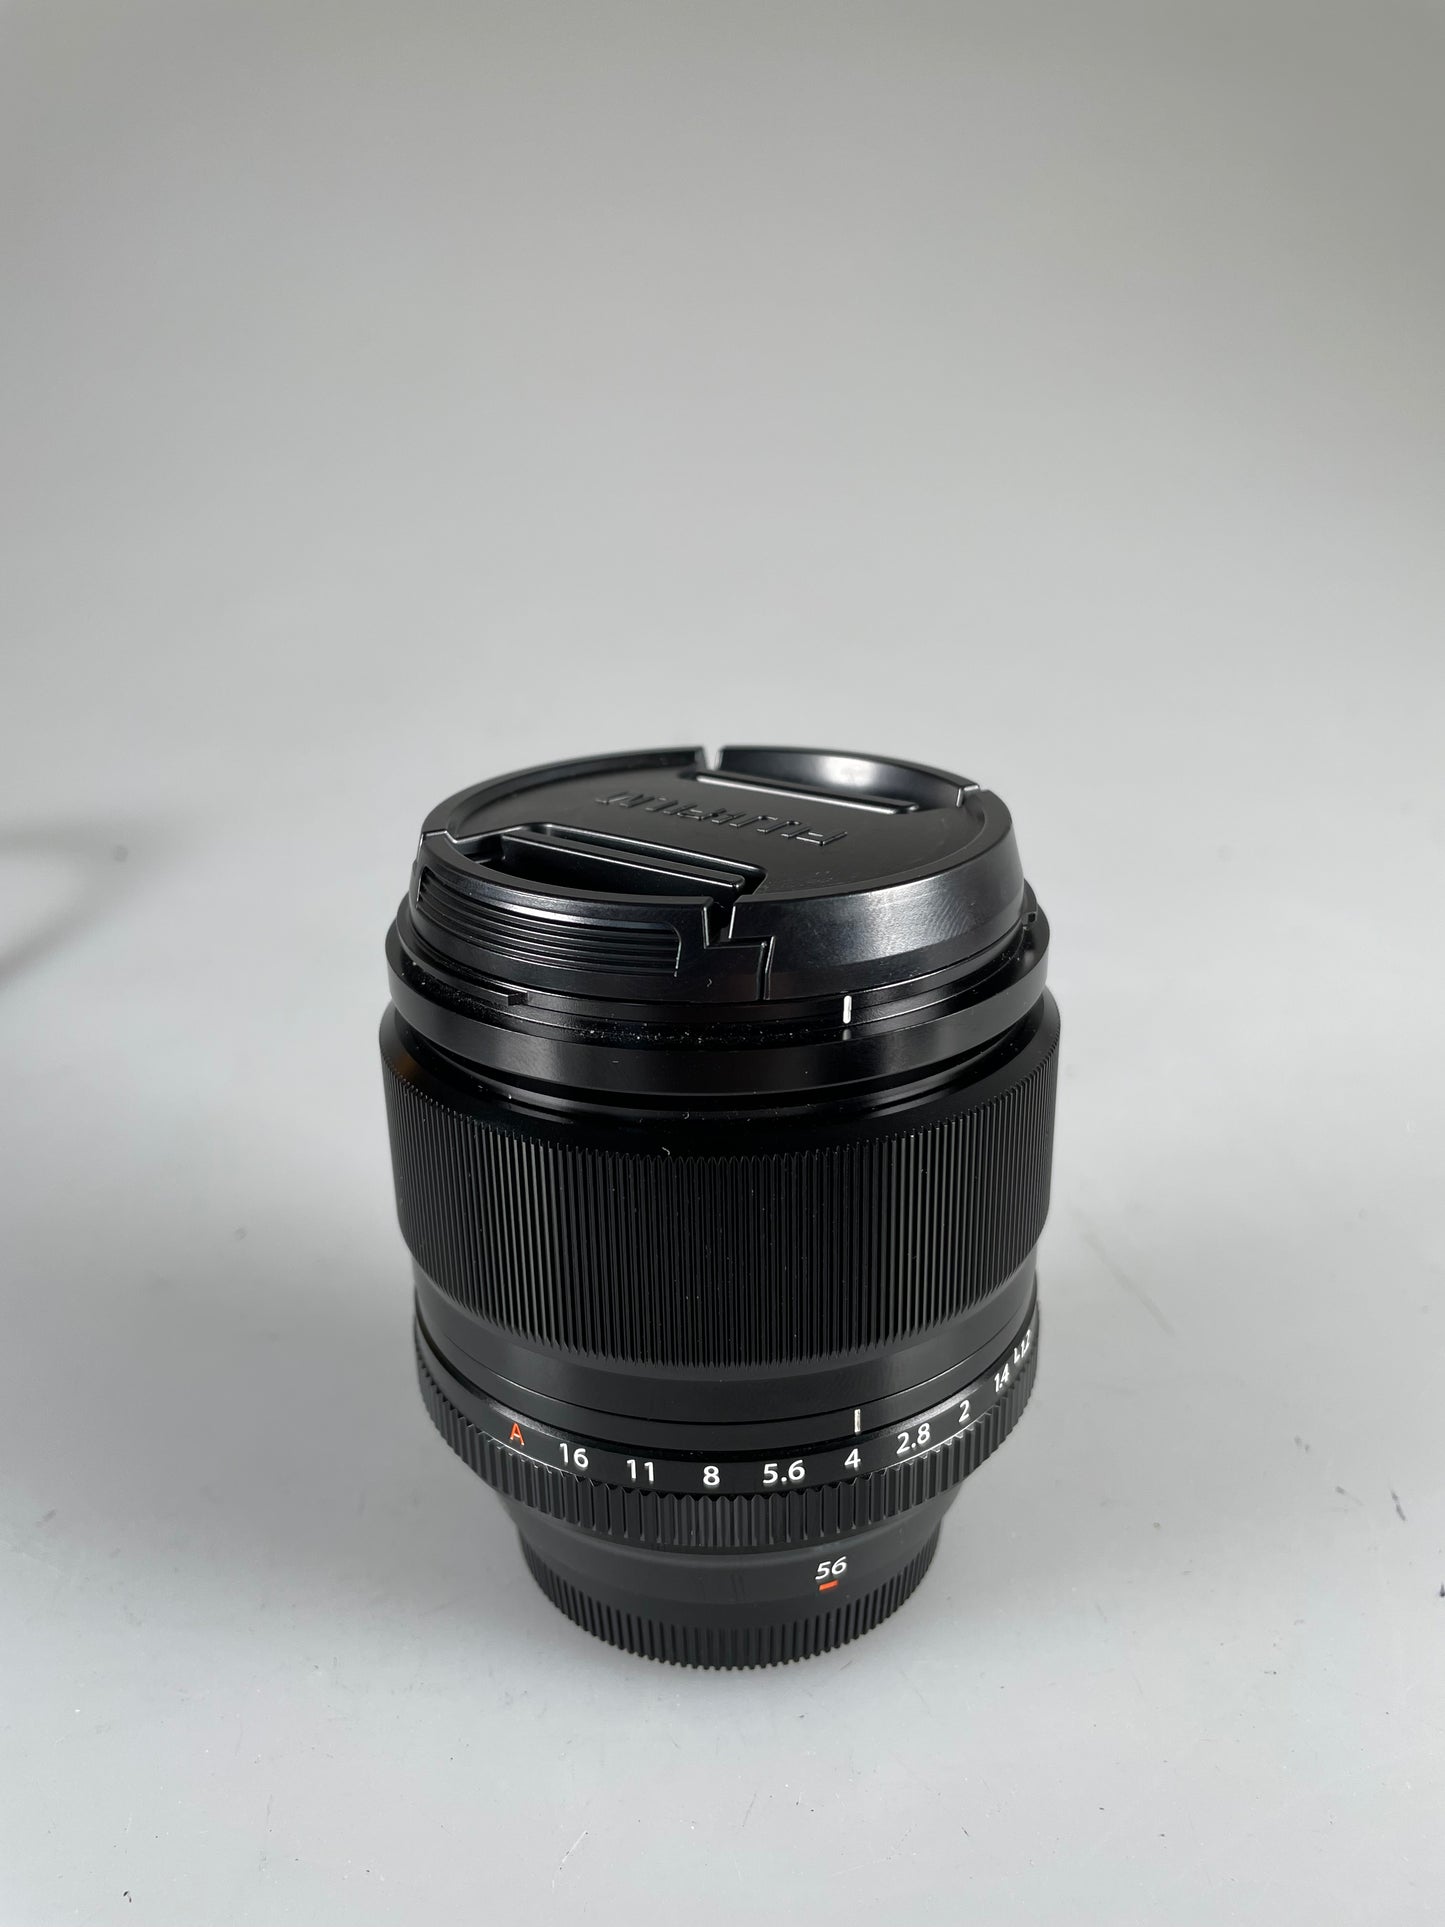 Fuji Fujifilm XF 56mm f1.2 R Super EBC Lens